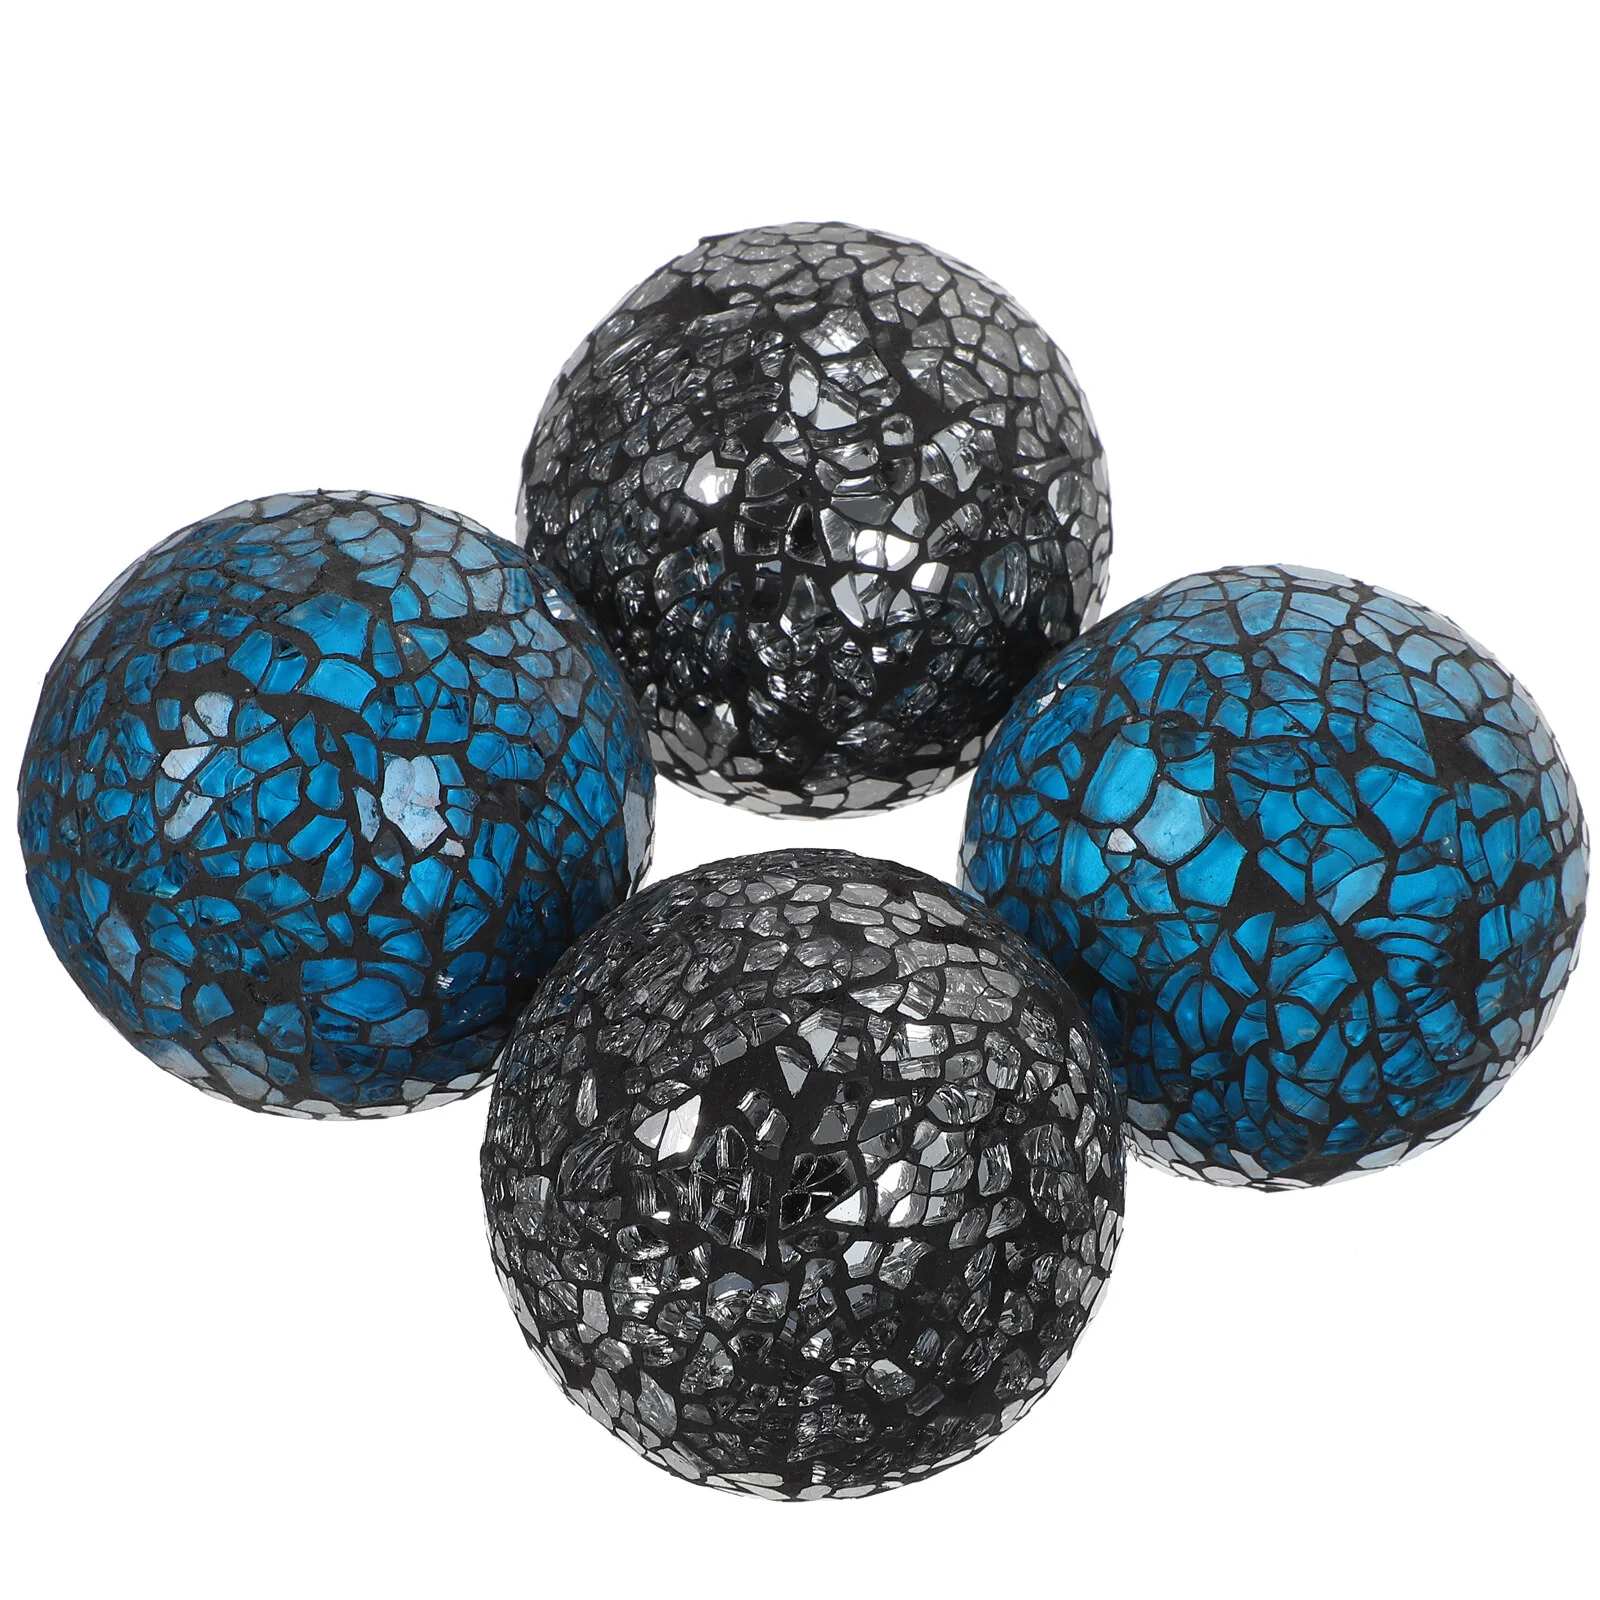 

4Pcs Glass Mosaic Sphere Ball Decorative Balls Sphere Balls Wedding Centerpiece Home Decor